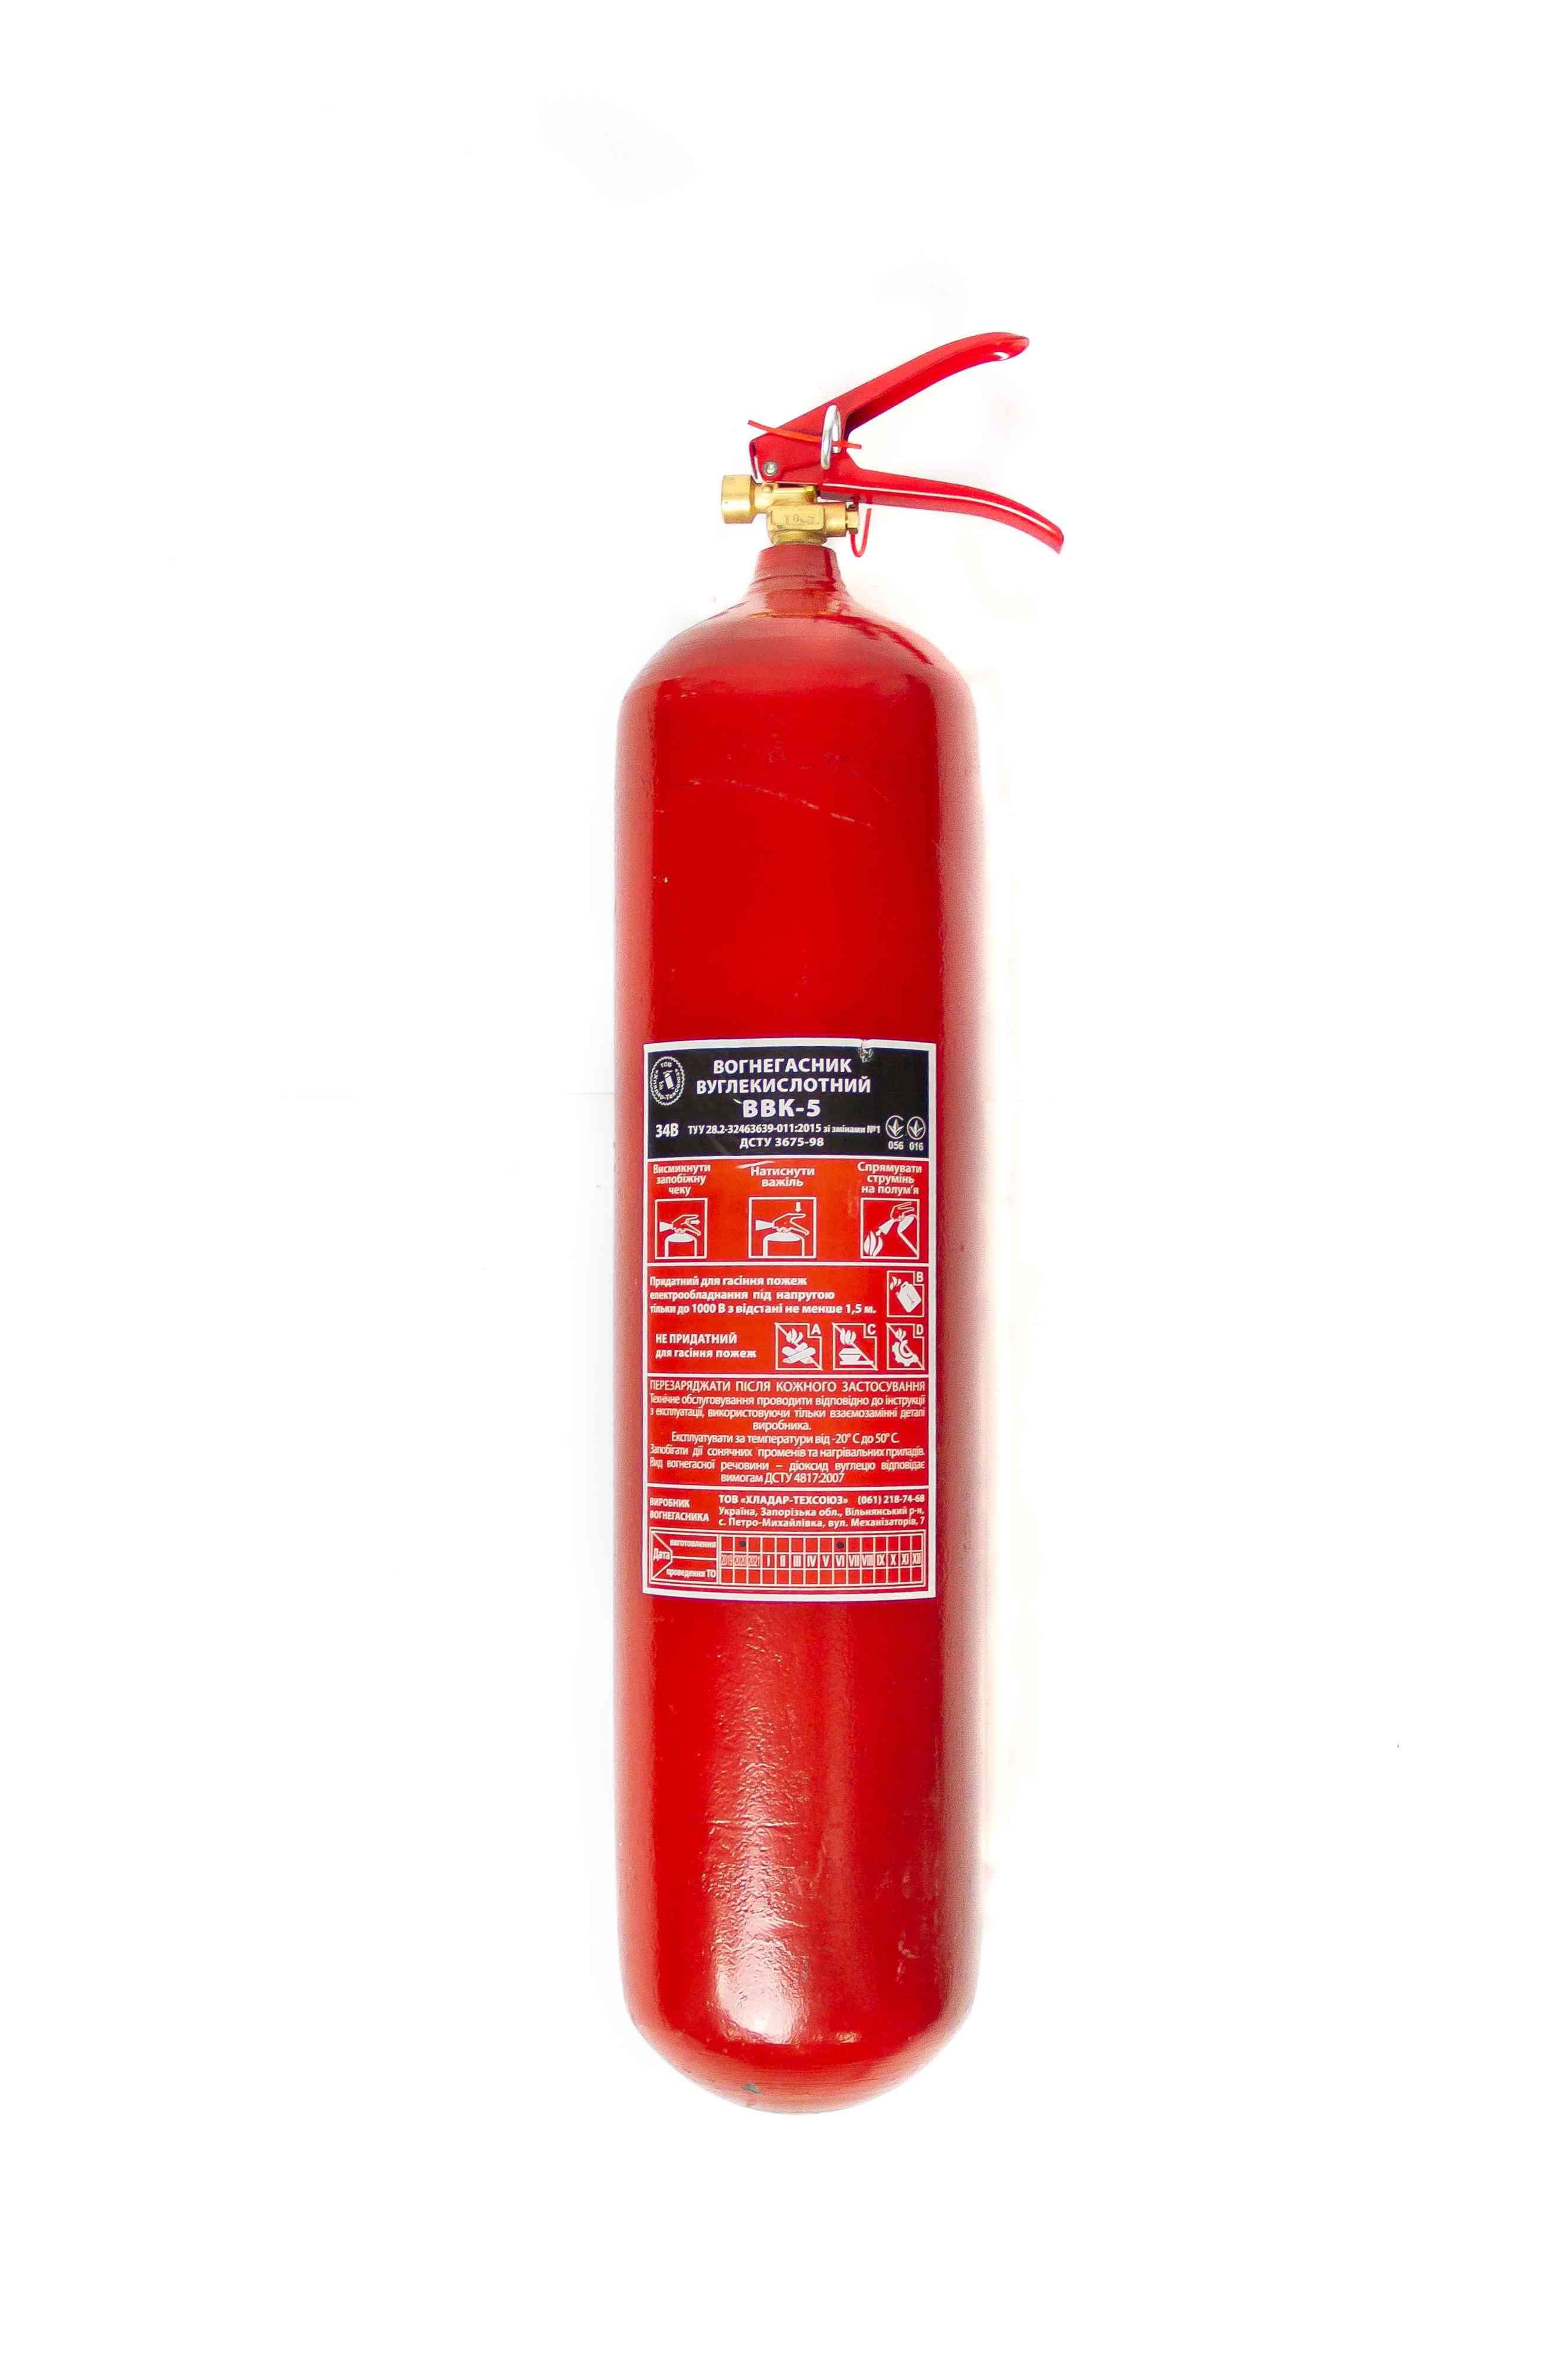 CO2 Fire Extinguisher-5 photo :: Marko Ltd